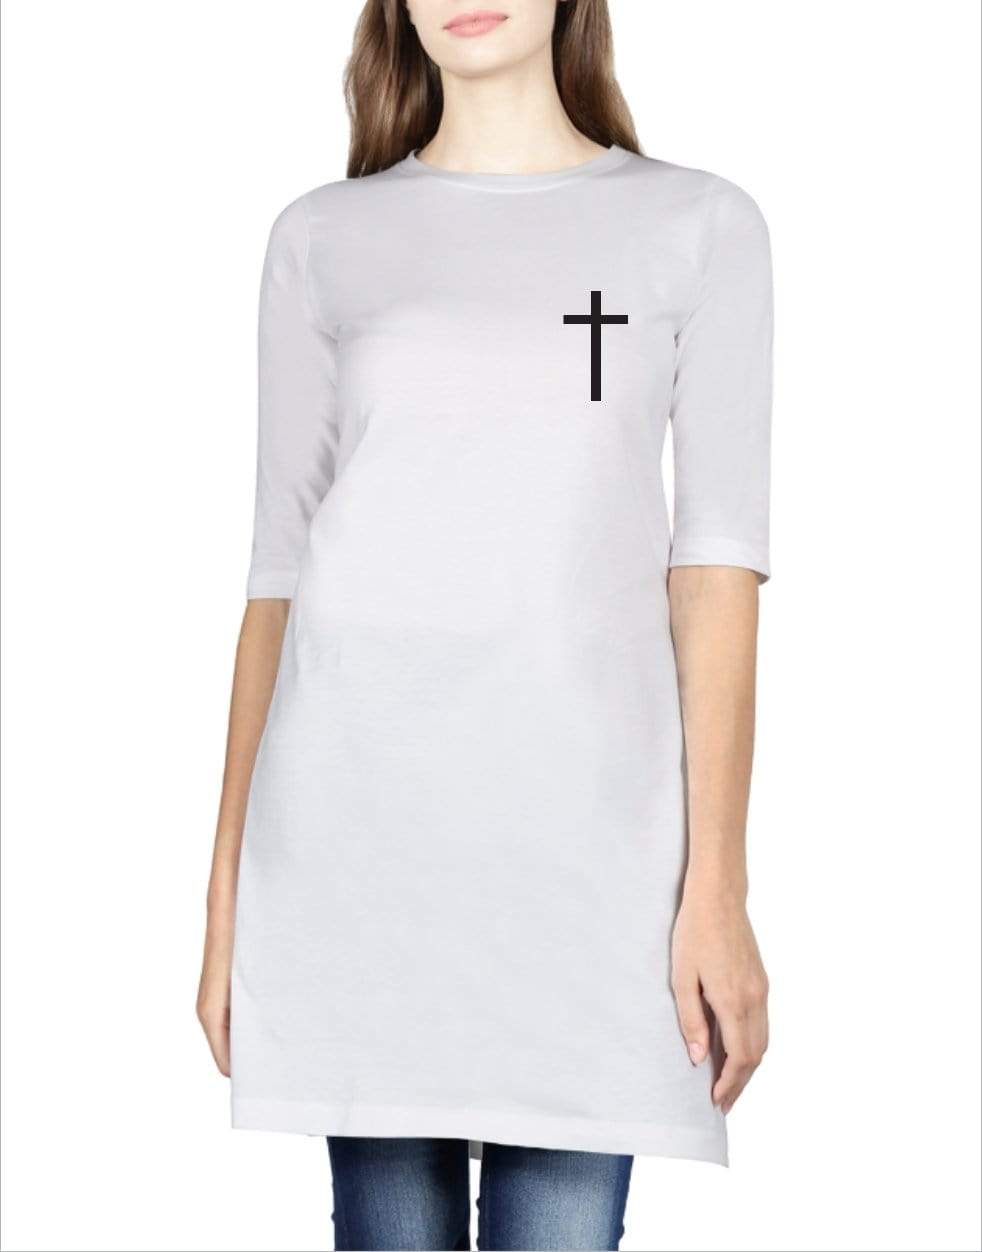 Living Words Women Round Neck T Shirt S / White Cross